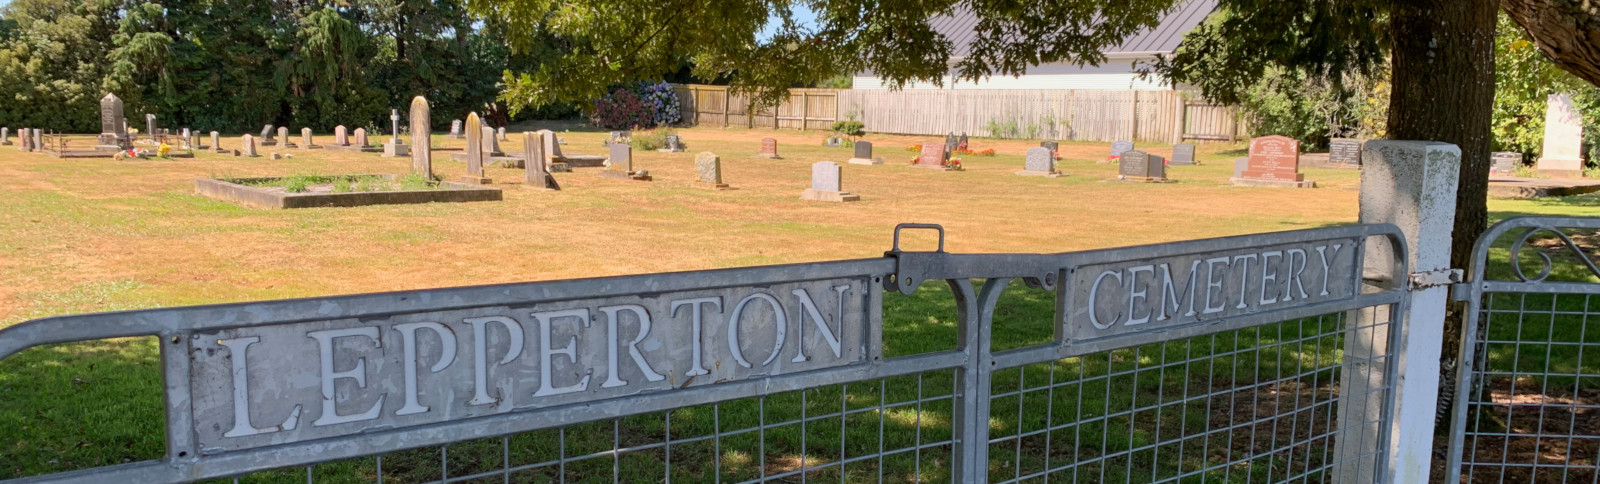 Lepperton cemetery